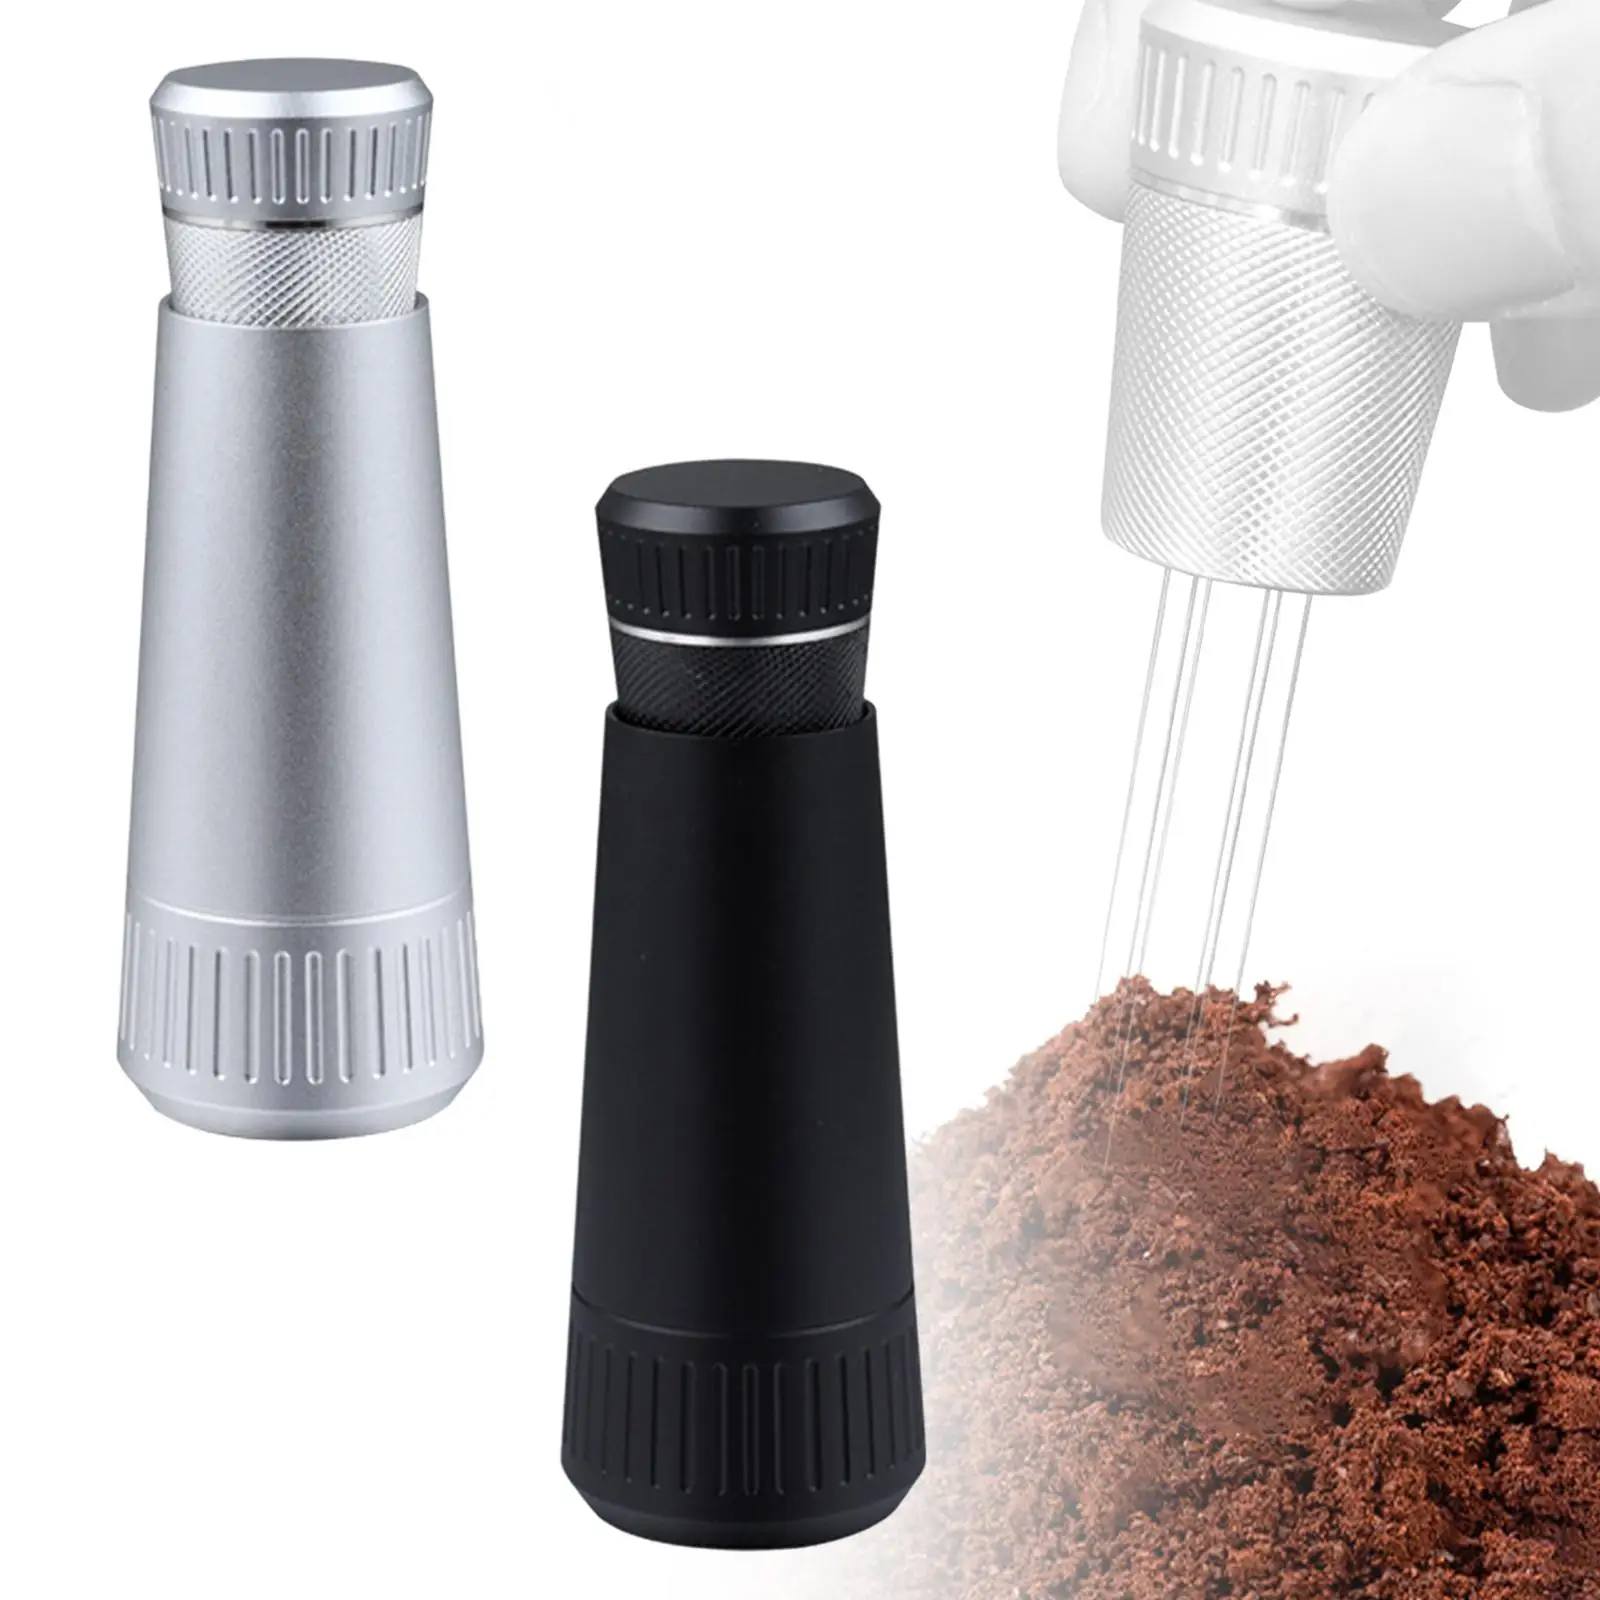 Multipurpose Coffee Stirrer Tool Espresso Stirring Distributor 6 Detachable Pins Gadget Sturdy Manual Stainless Steel